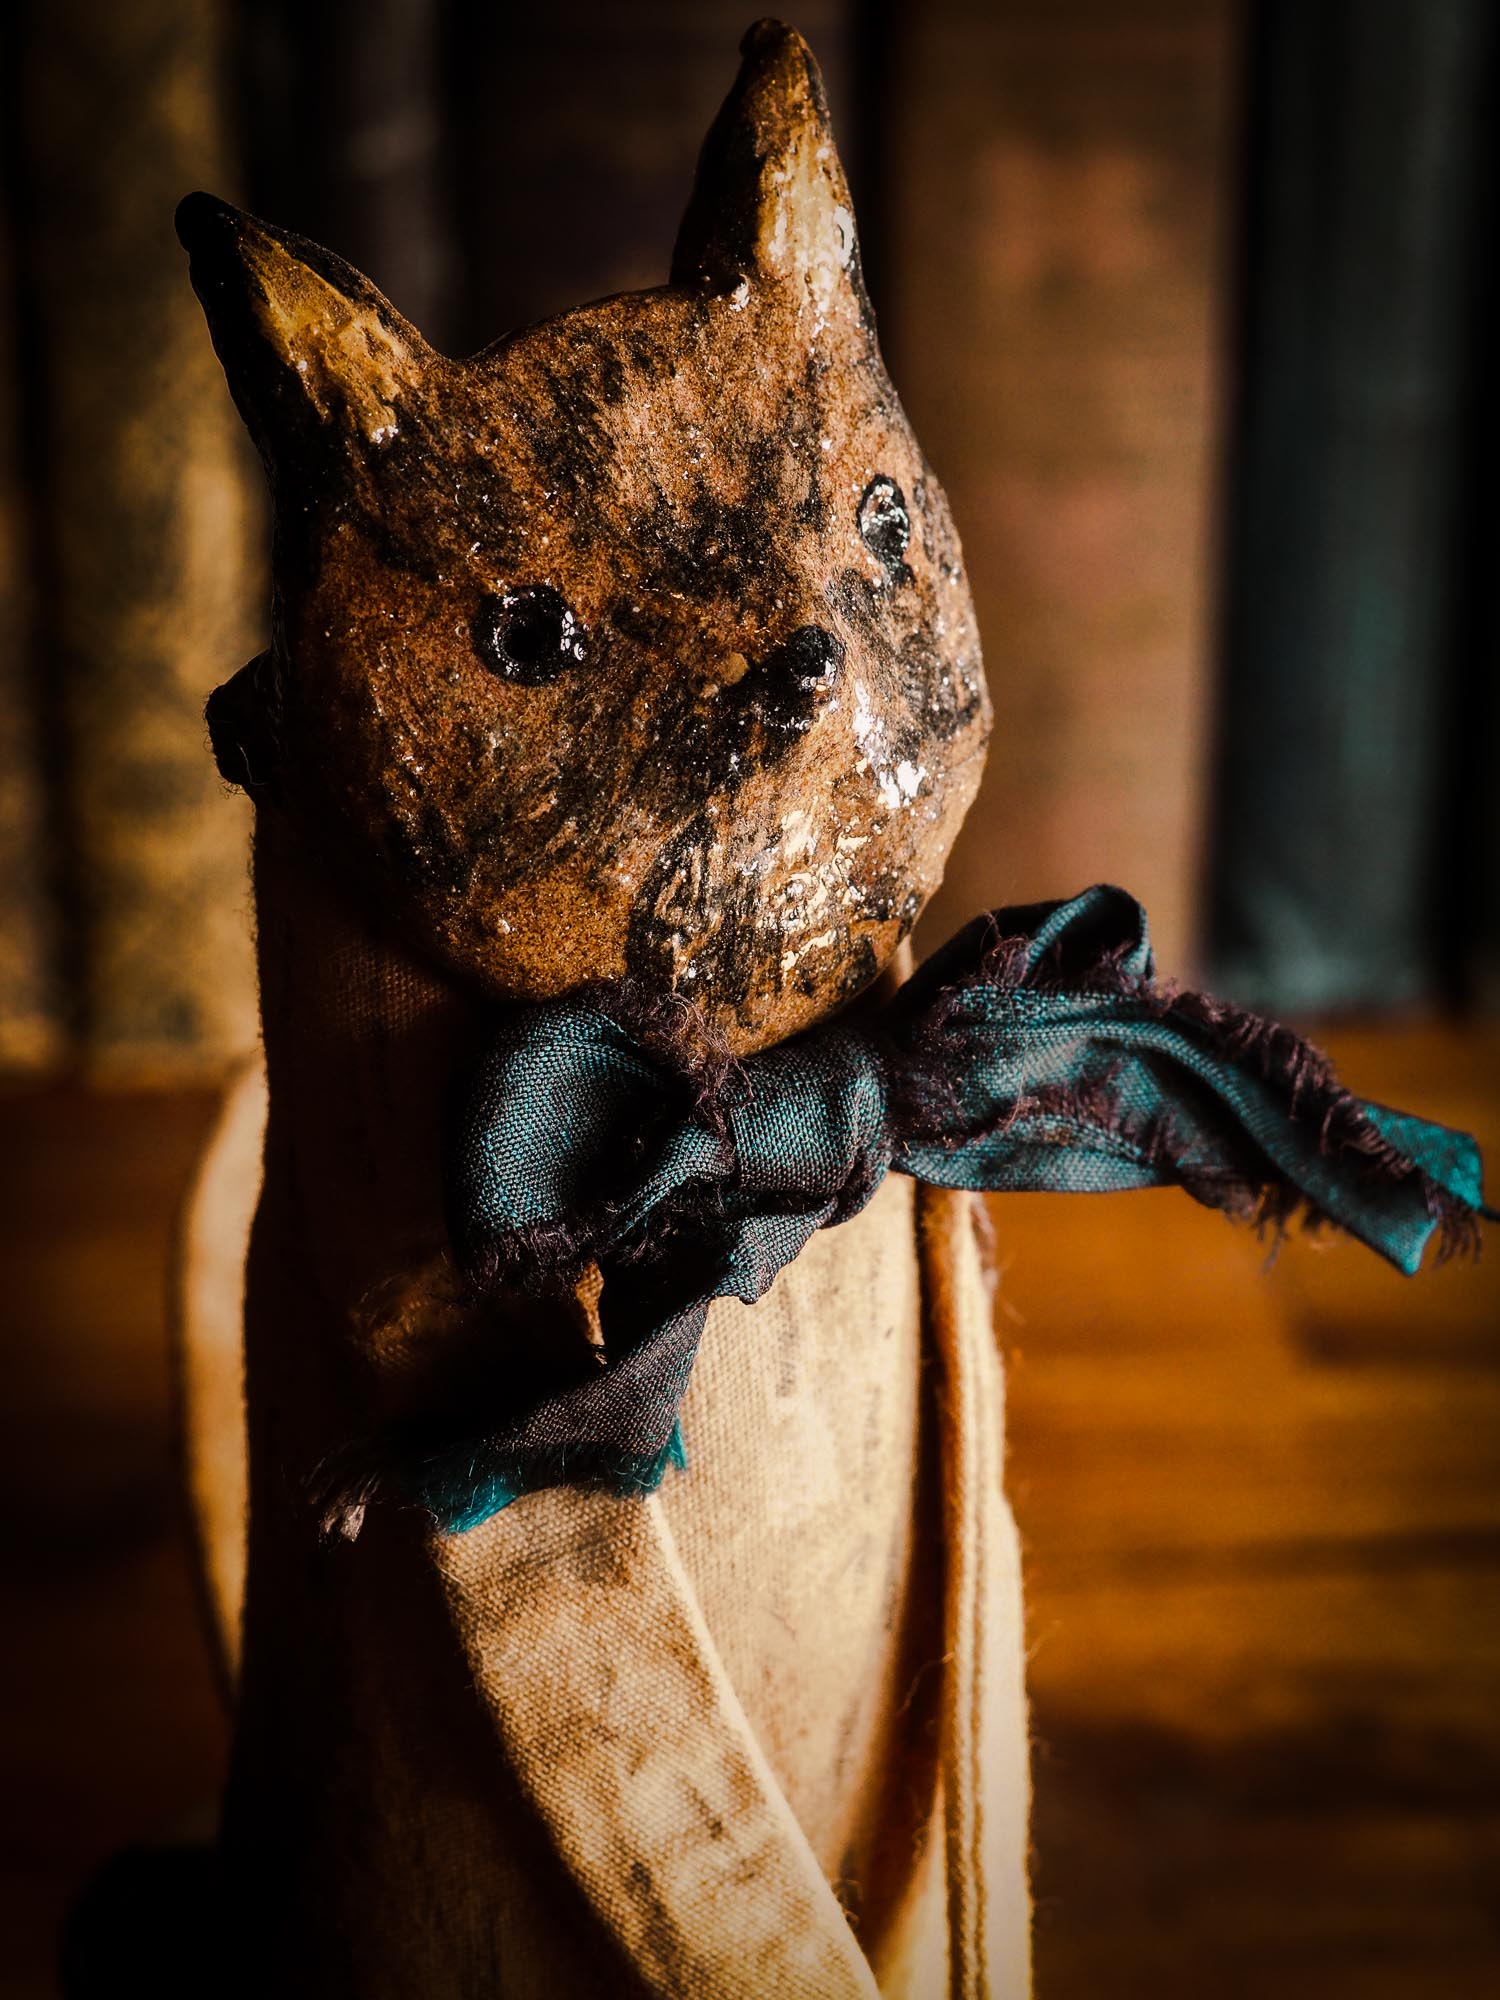 Woodlands wolf Soft sculpture art doll by Idania Salcido Danita Art with a Handmade ceramics face, organic dyed fabric and silk bow